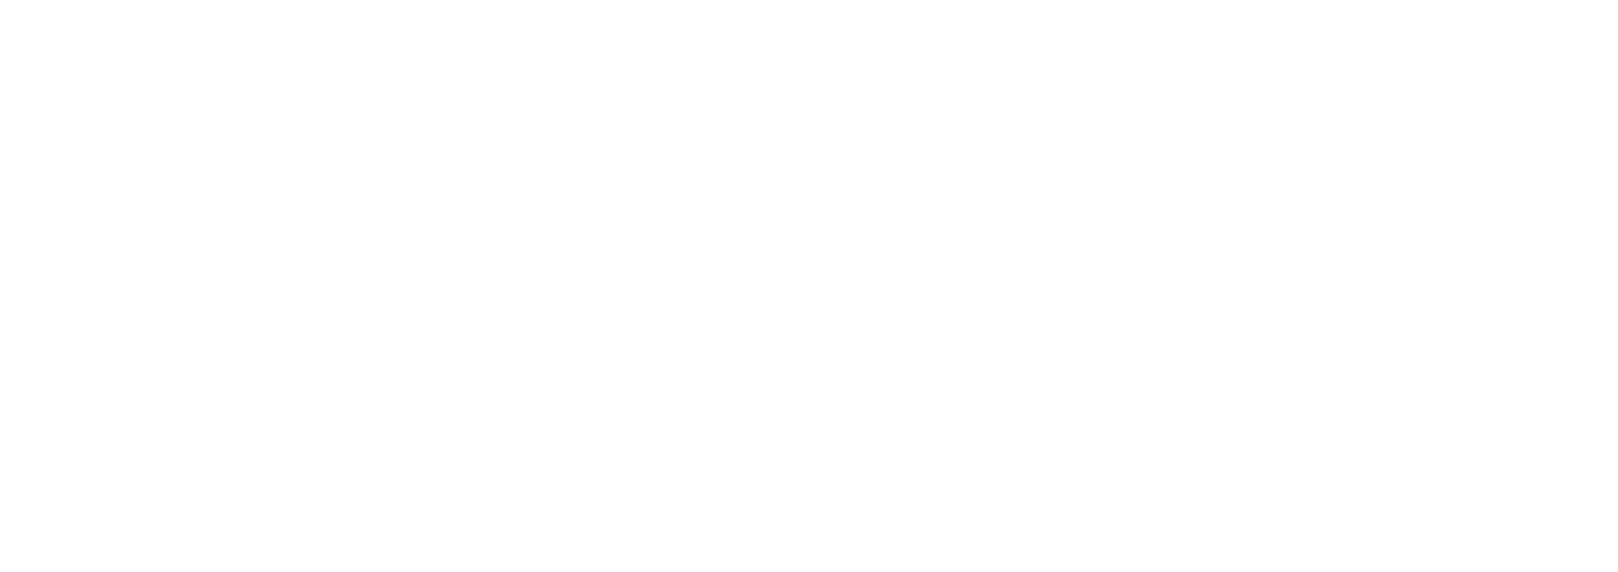 Arctic Paper logo large for dark backgrounds (transparent PNG)